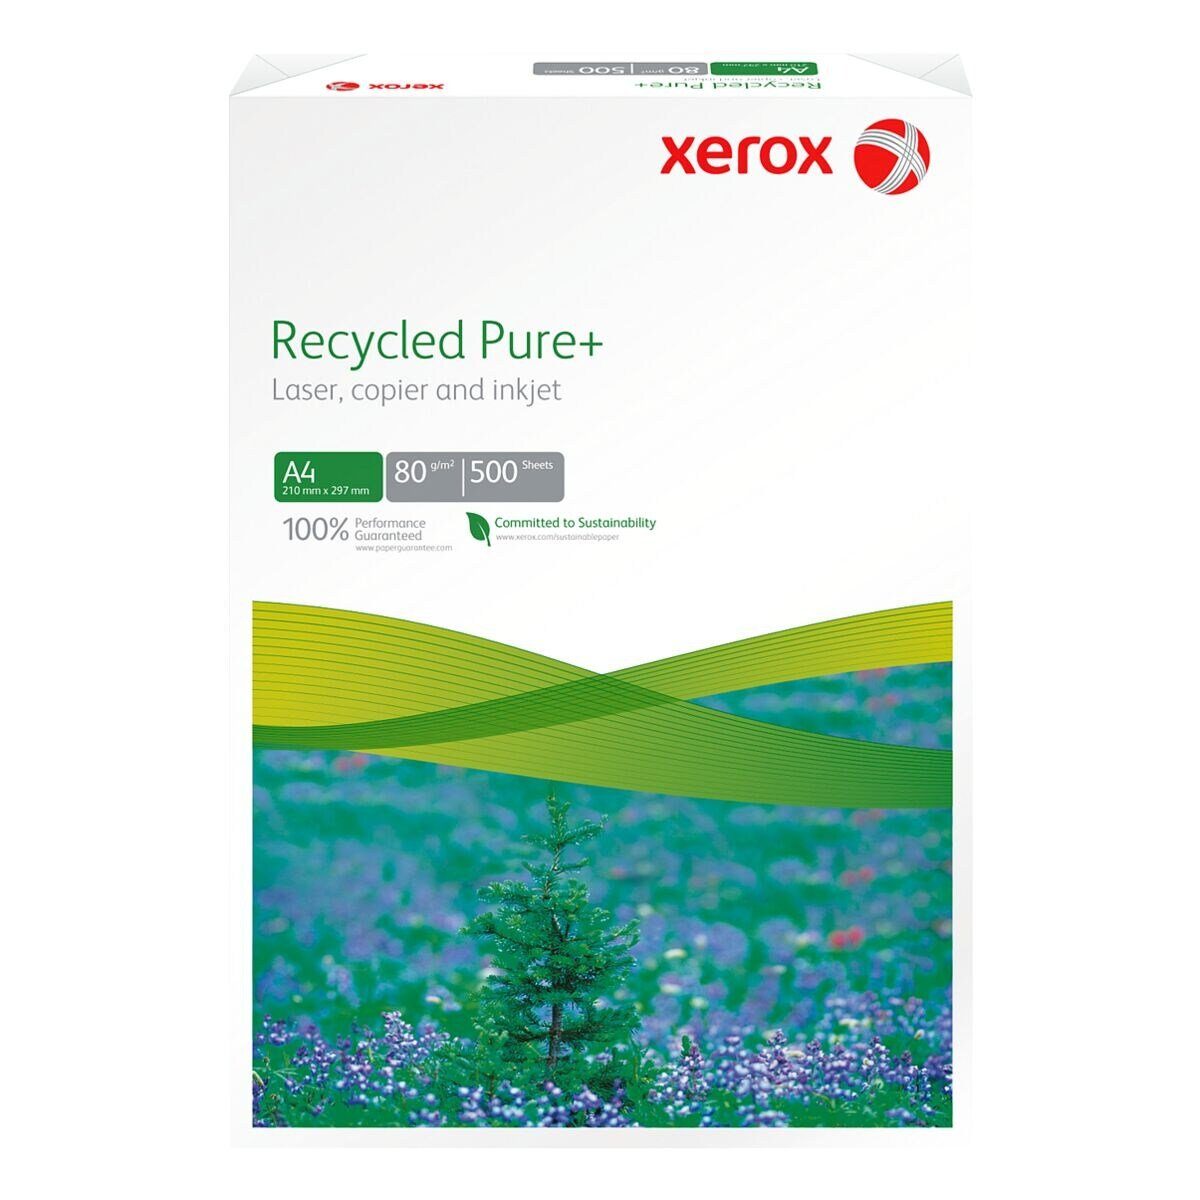 A4, Recyclingpapier 80 Xerox DIN Format 500 Blatt g/m², 135 CIE, Pure+, Recycled